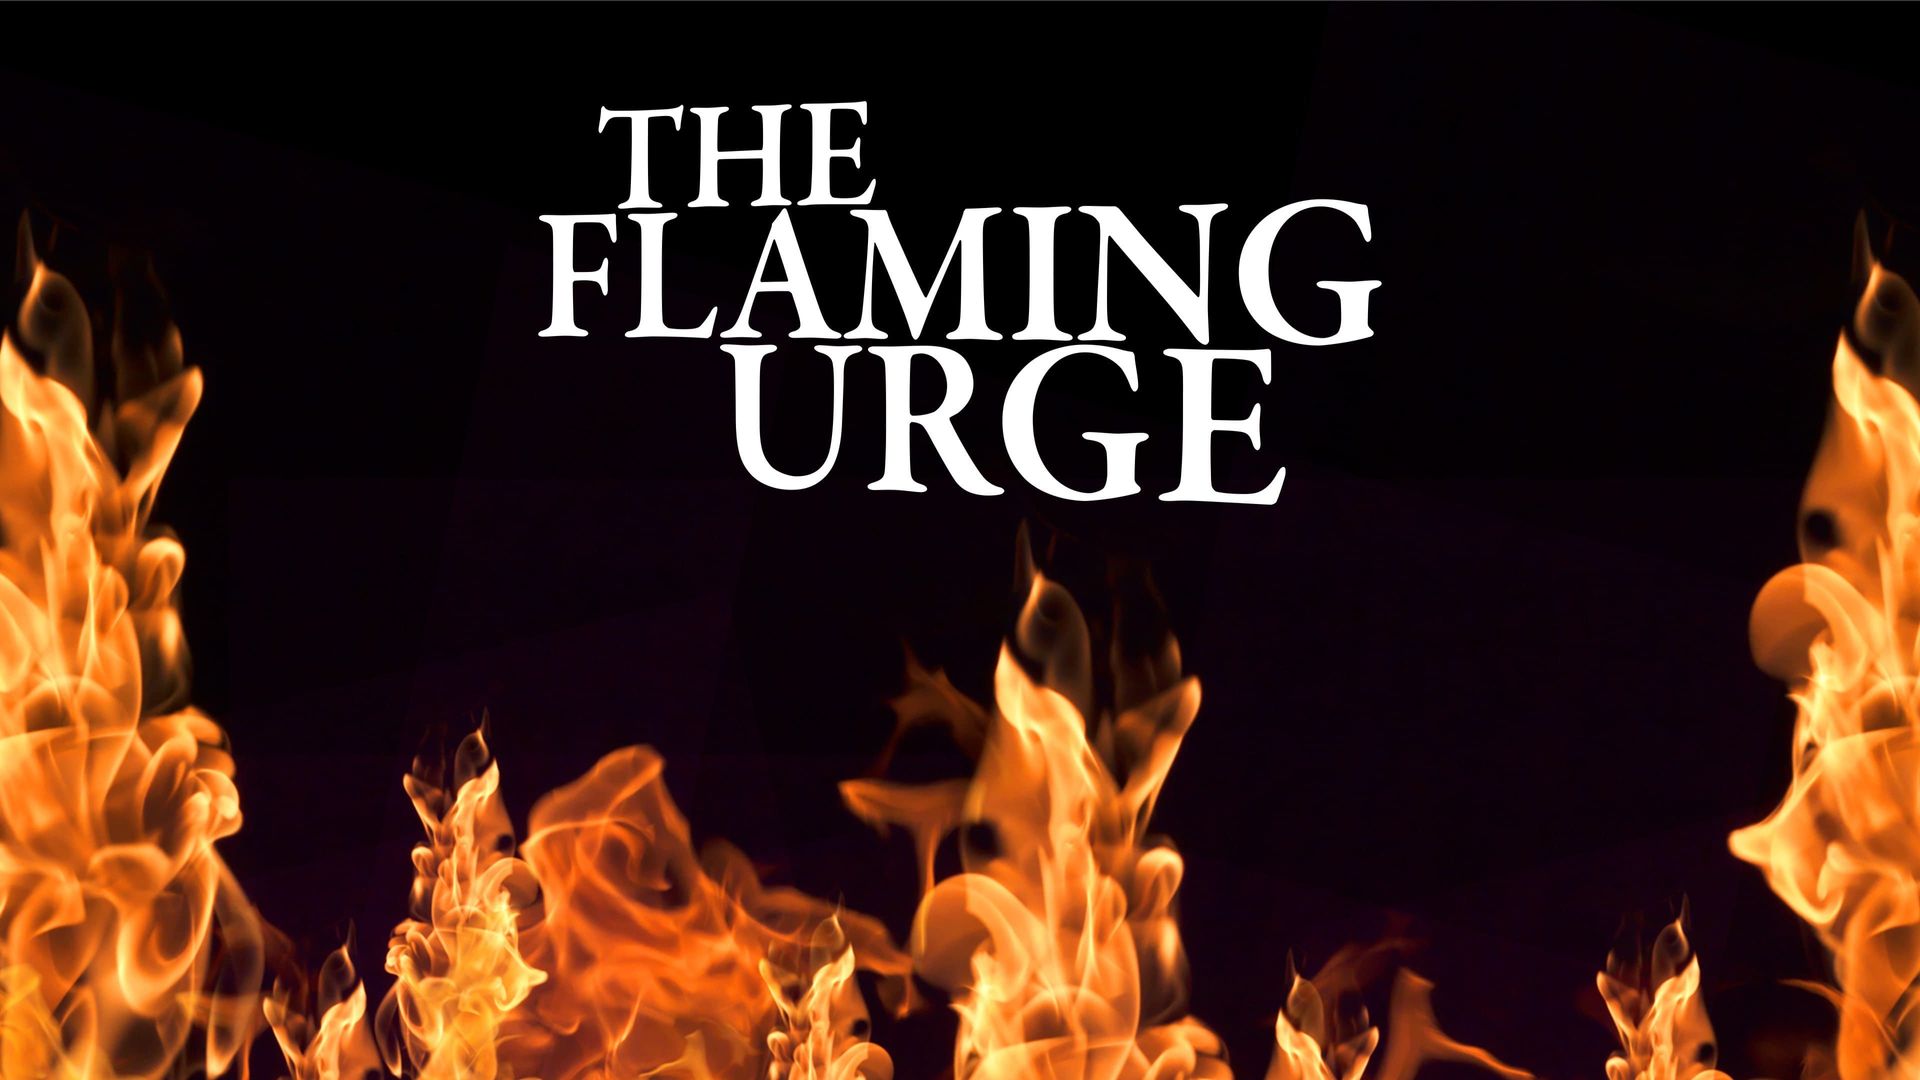 The Flaming Urge background